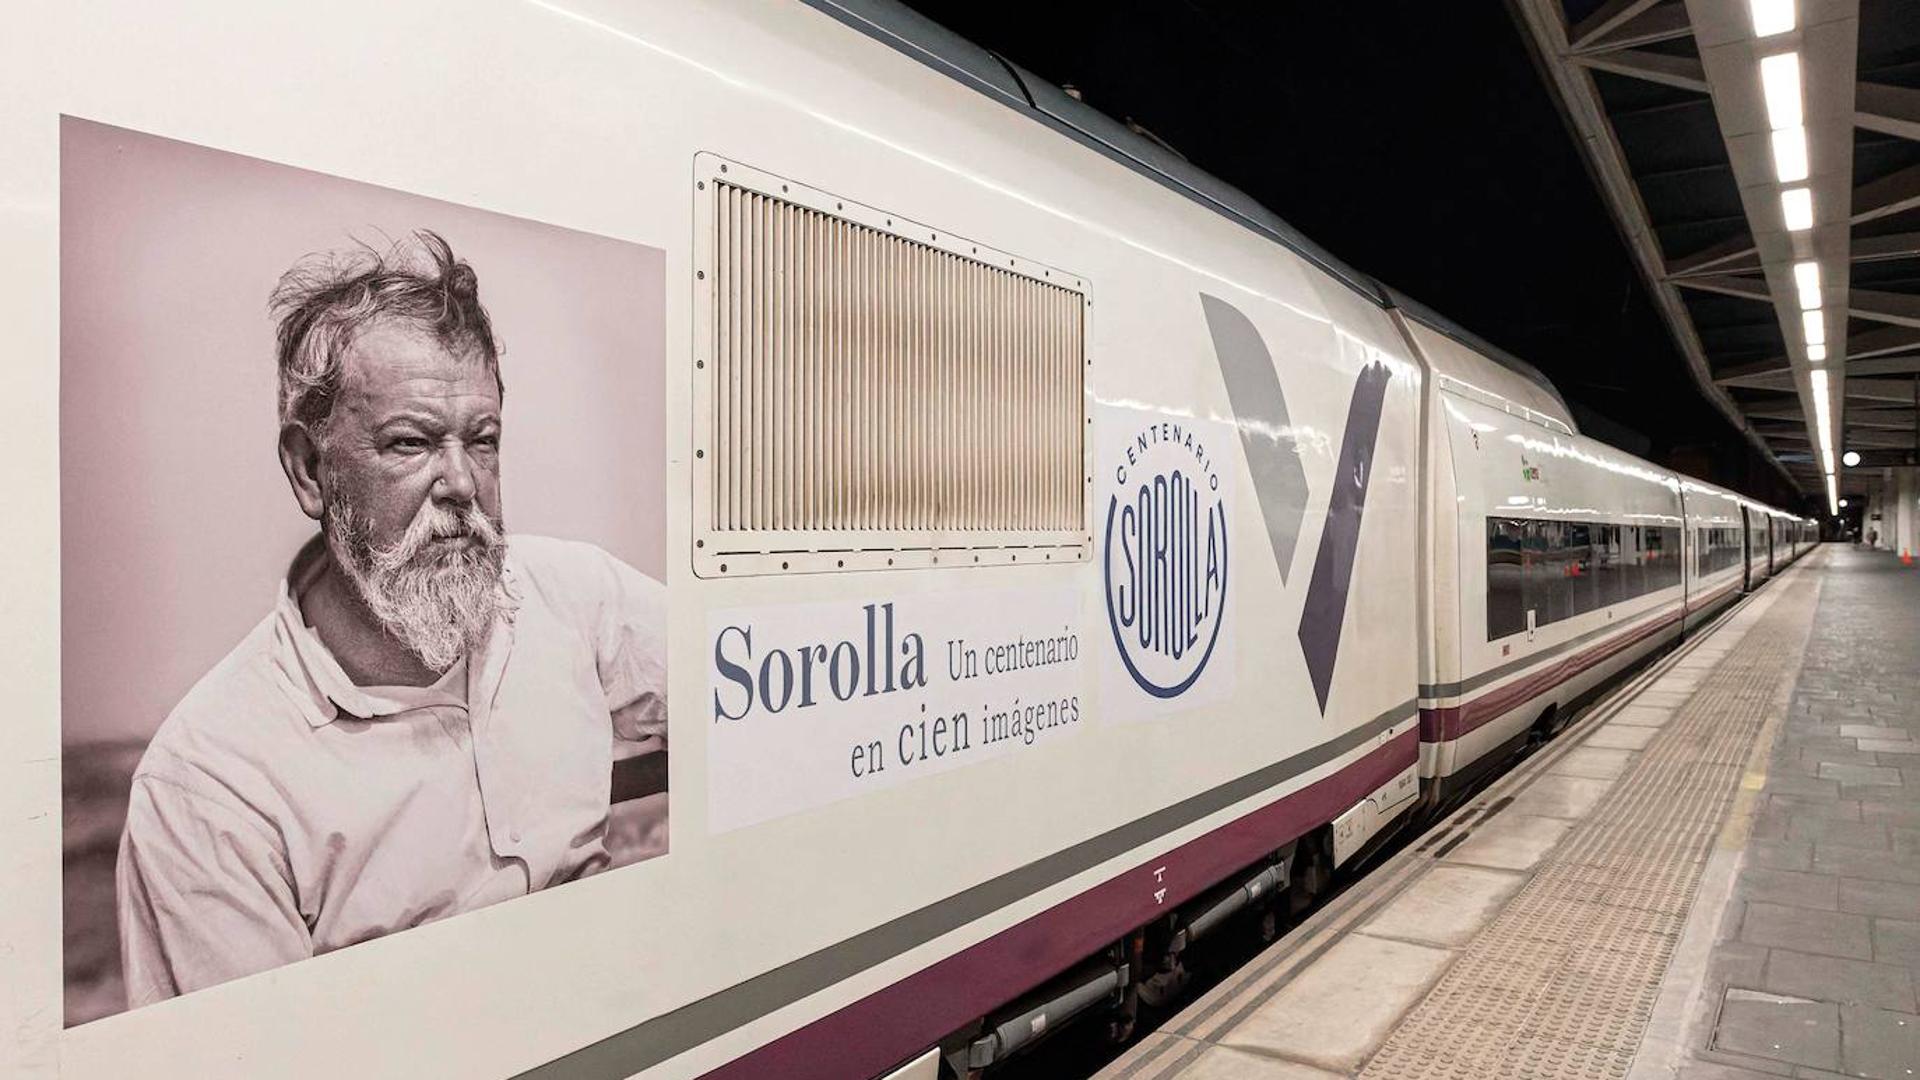 Sorolla, on board the AVE Murcia-Madrid